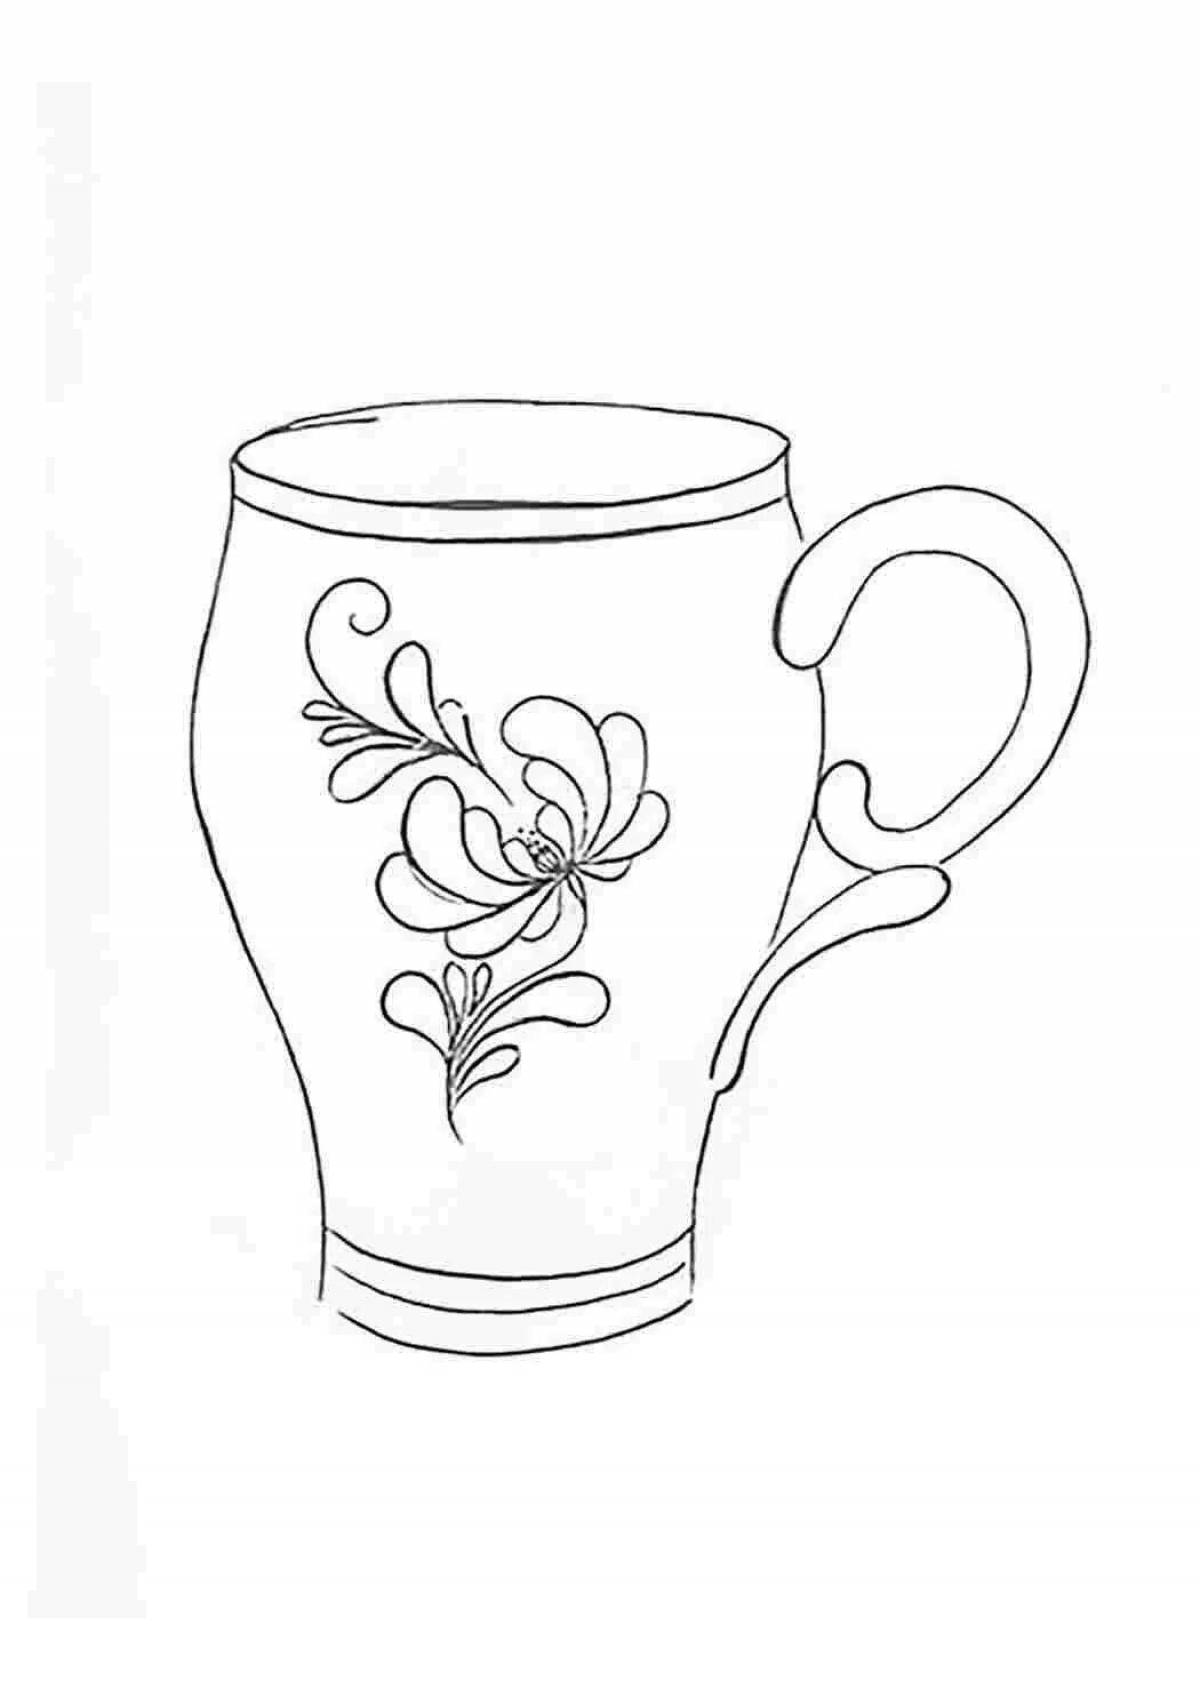 Gzhel art mug coloring